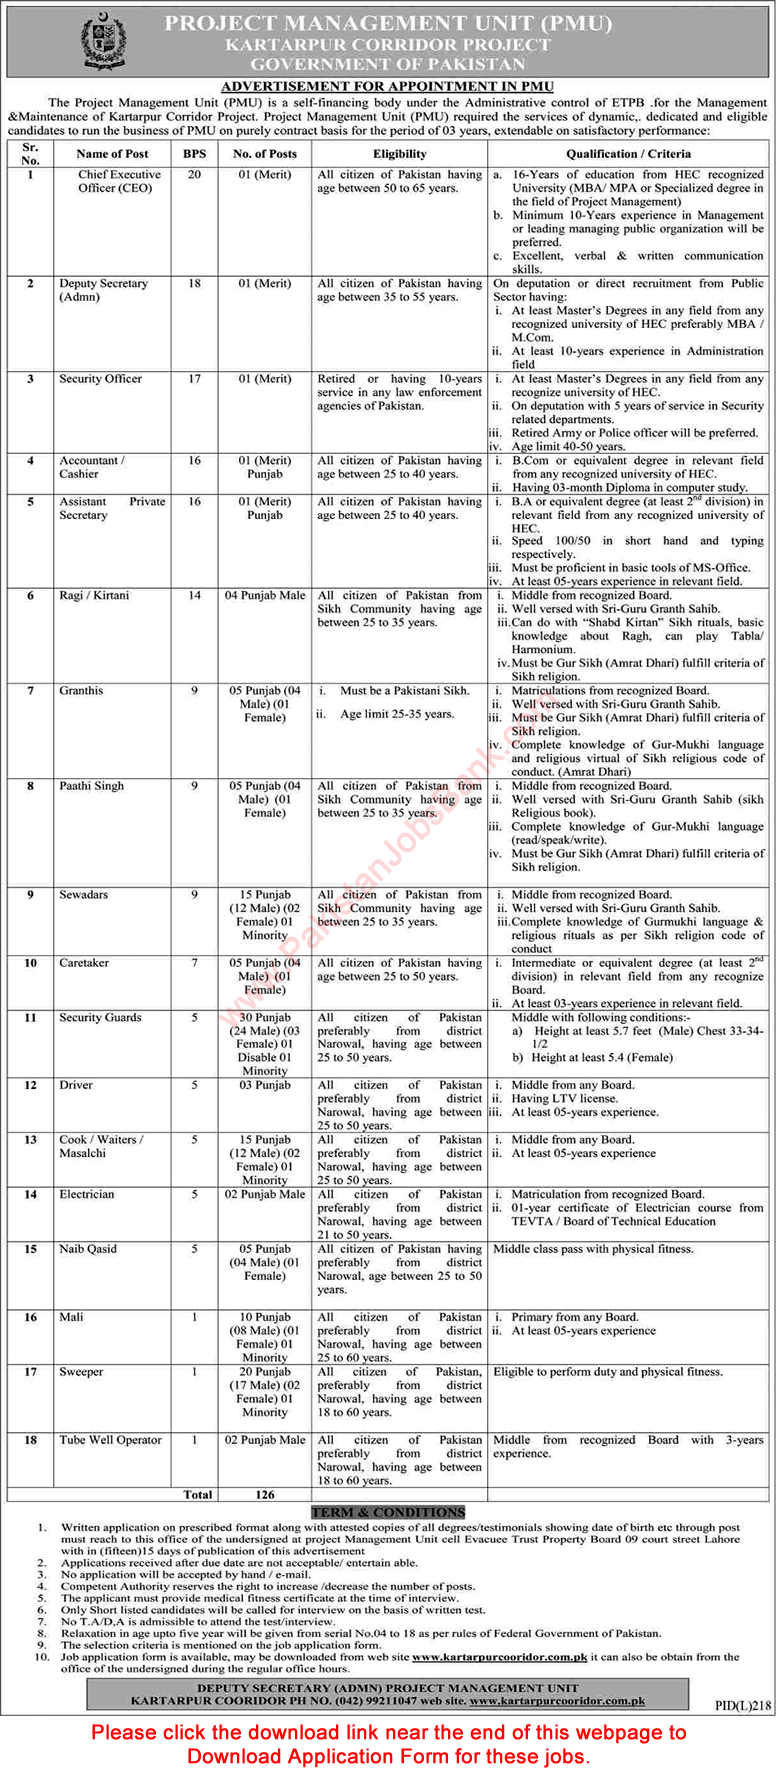 Kartarpur Corridor Project Jobs 2021 July / August Application Form Project Management Unit Latest